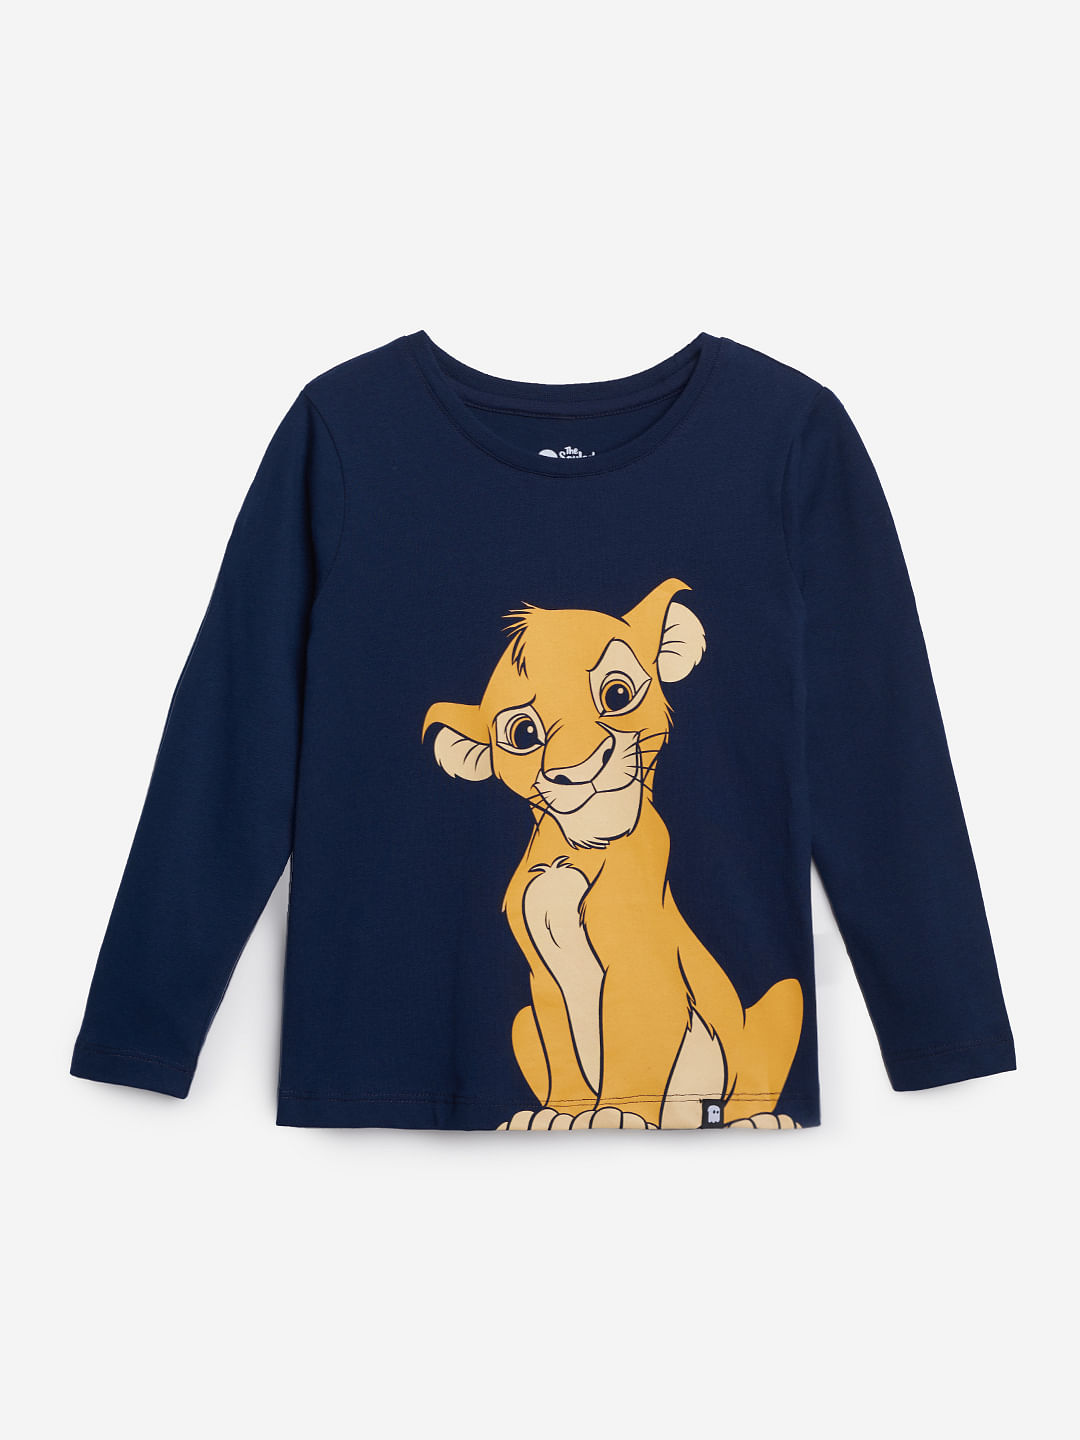 Buy The Lion King: Simba Girls Full Sleeve T-shirts Online